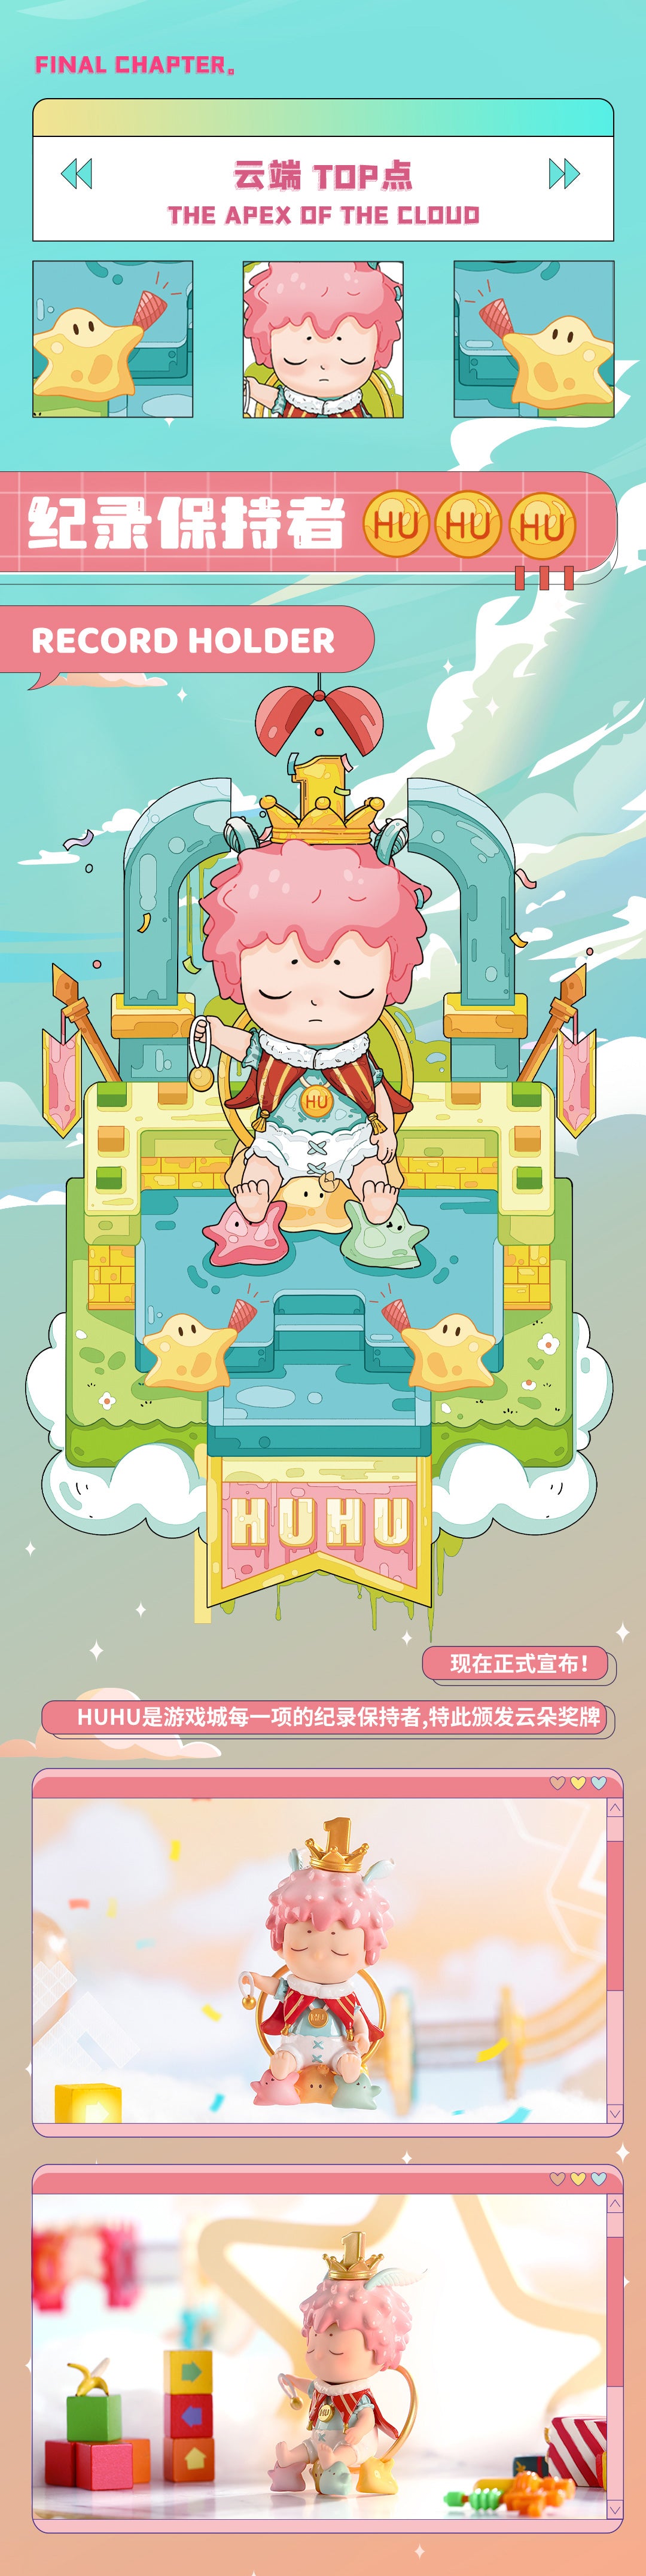 [Heyone] HUHU - Cloud Game City Series Blind Box